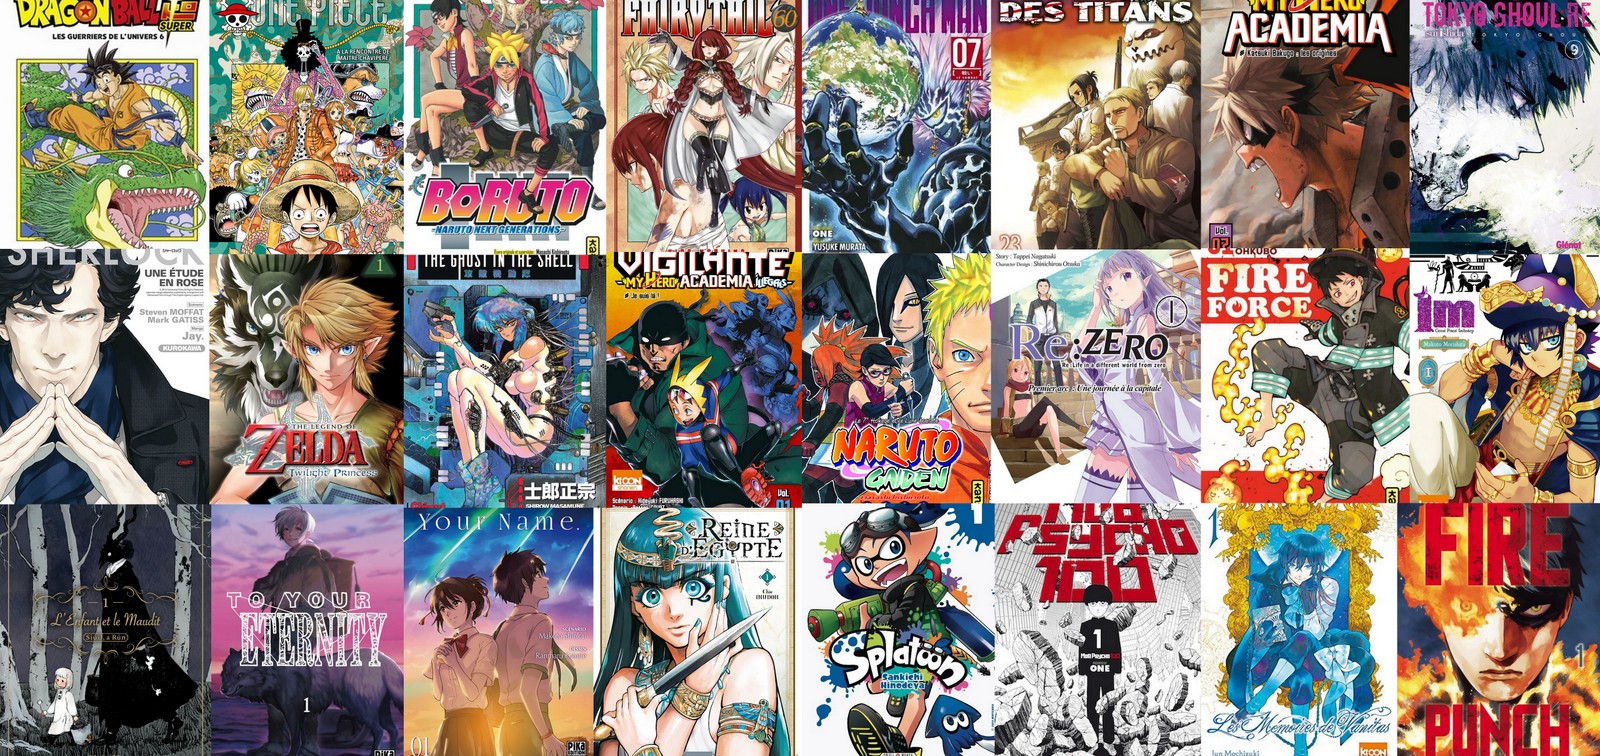 Manga : qui de Naruto ou One Piece est le plus aimé des Français